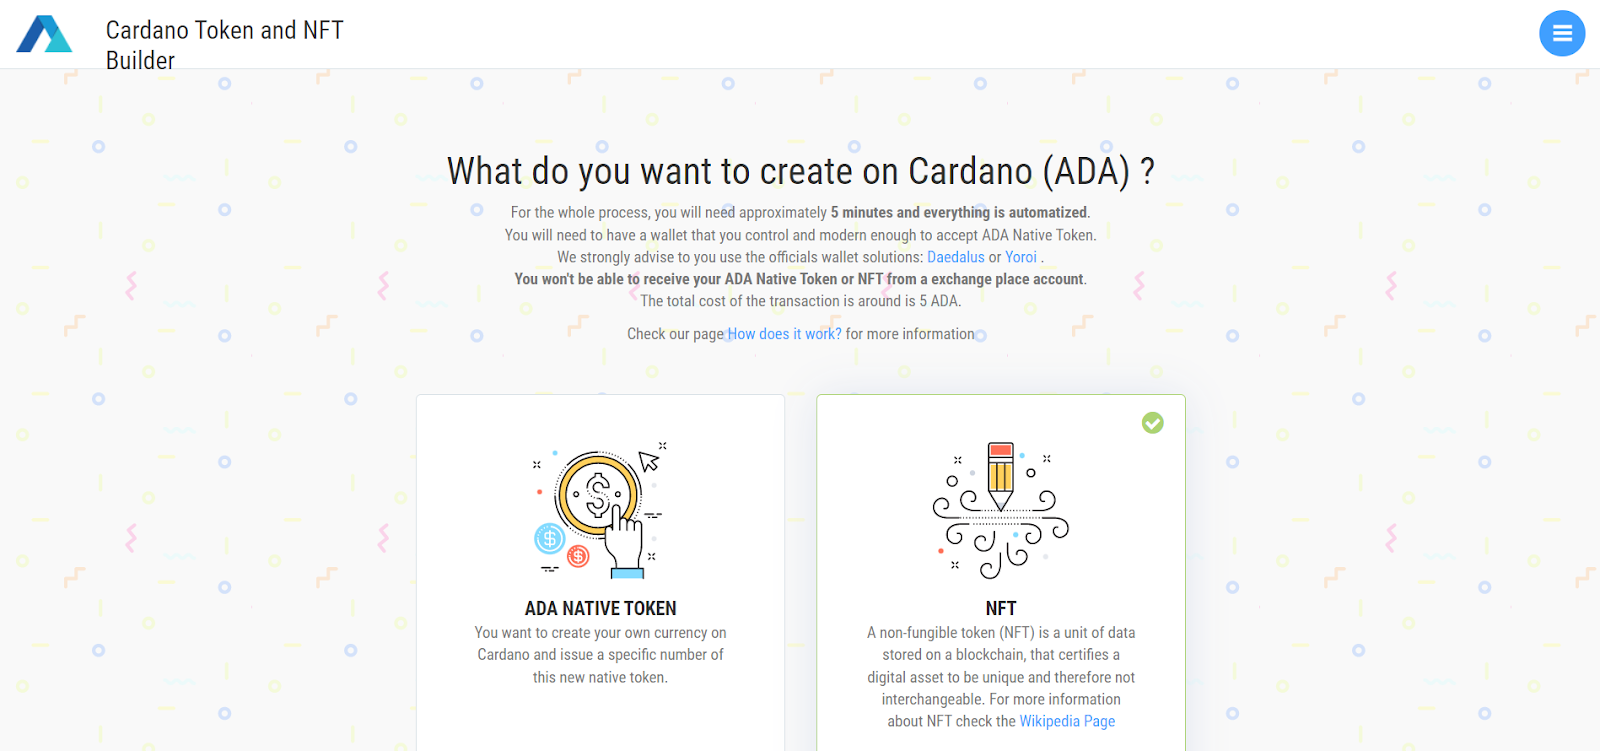 A screenshot from Cardano Token and NFT Builder.